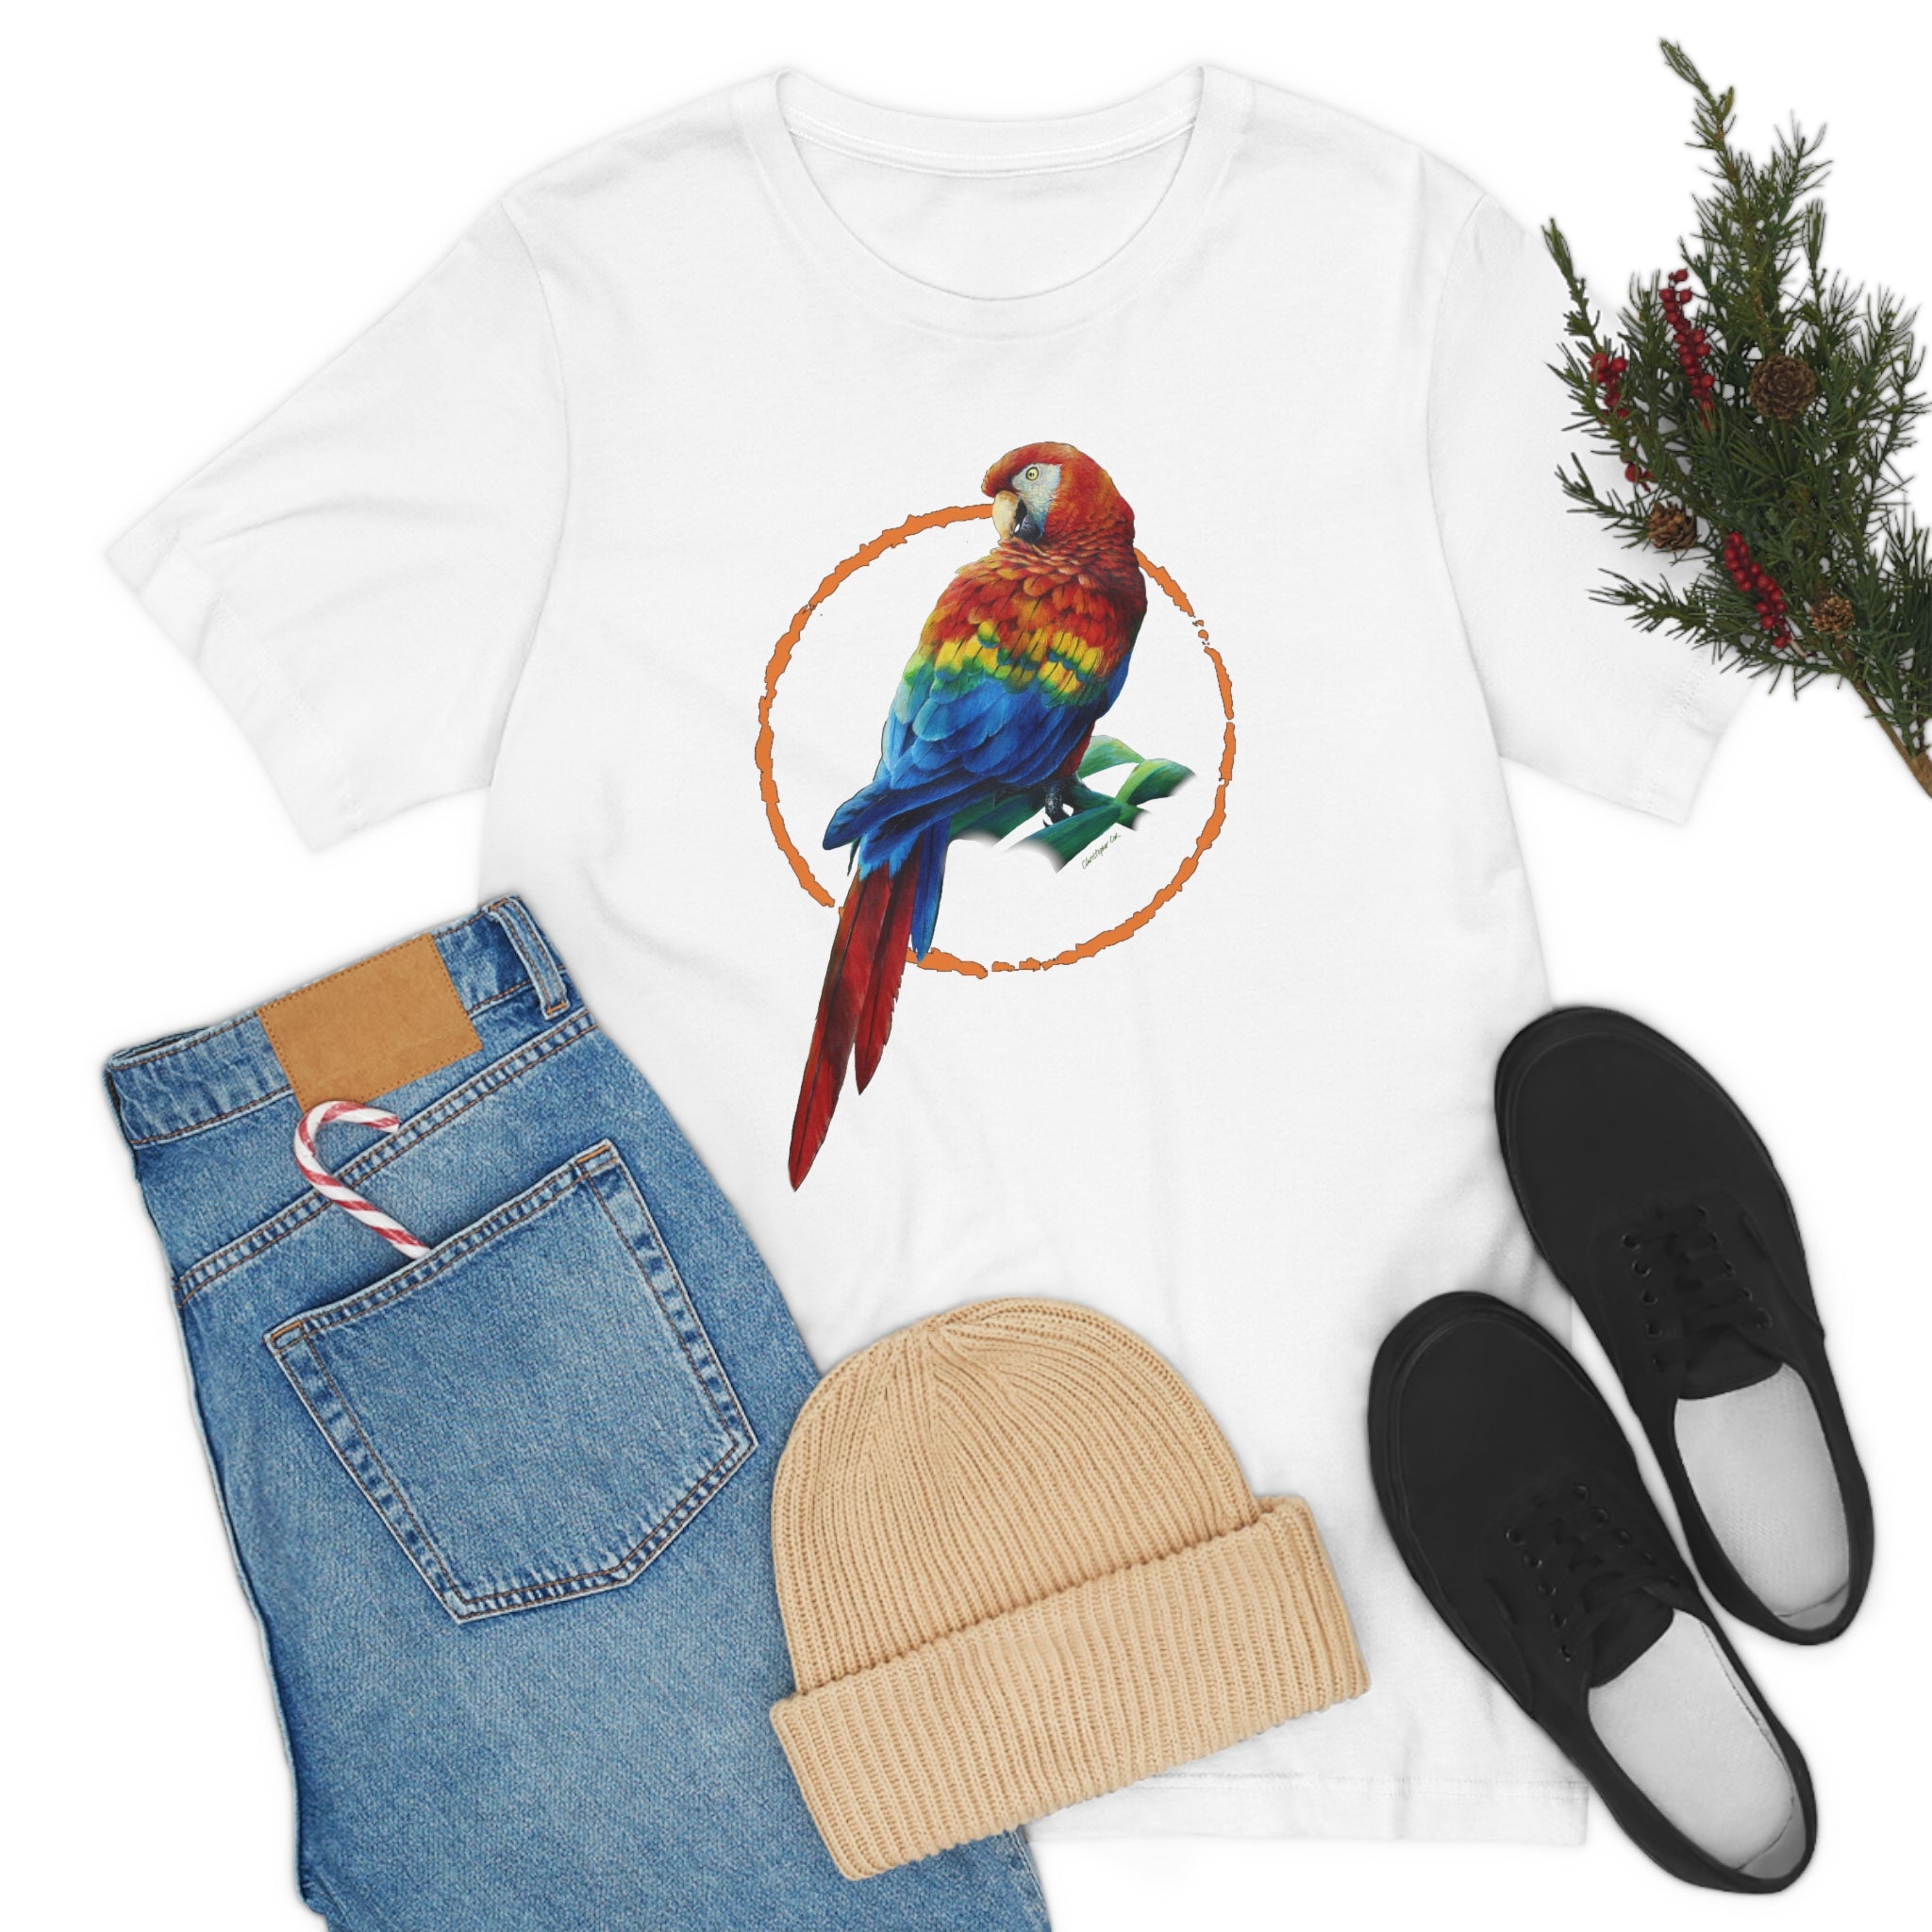 Scarlet Macaw Unisex Tee, Parrot shirts, Bird shirts, Wearable Art, Men's shirts